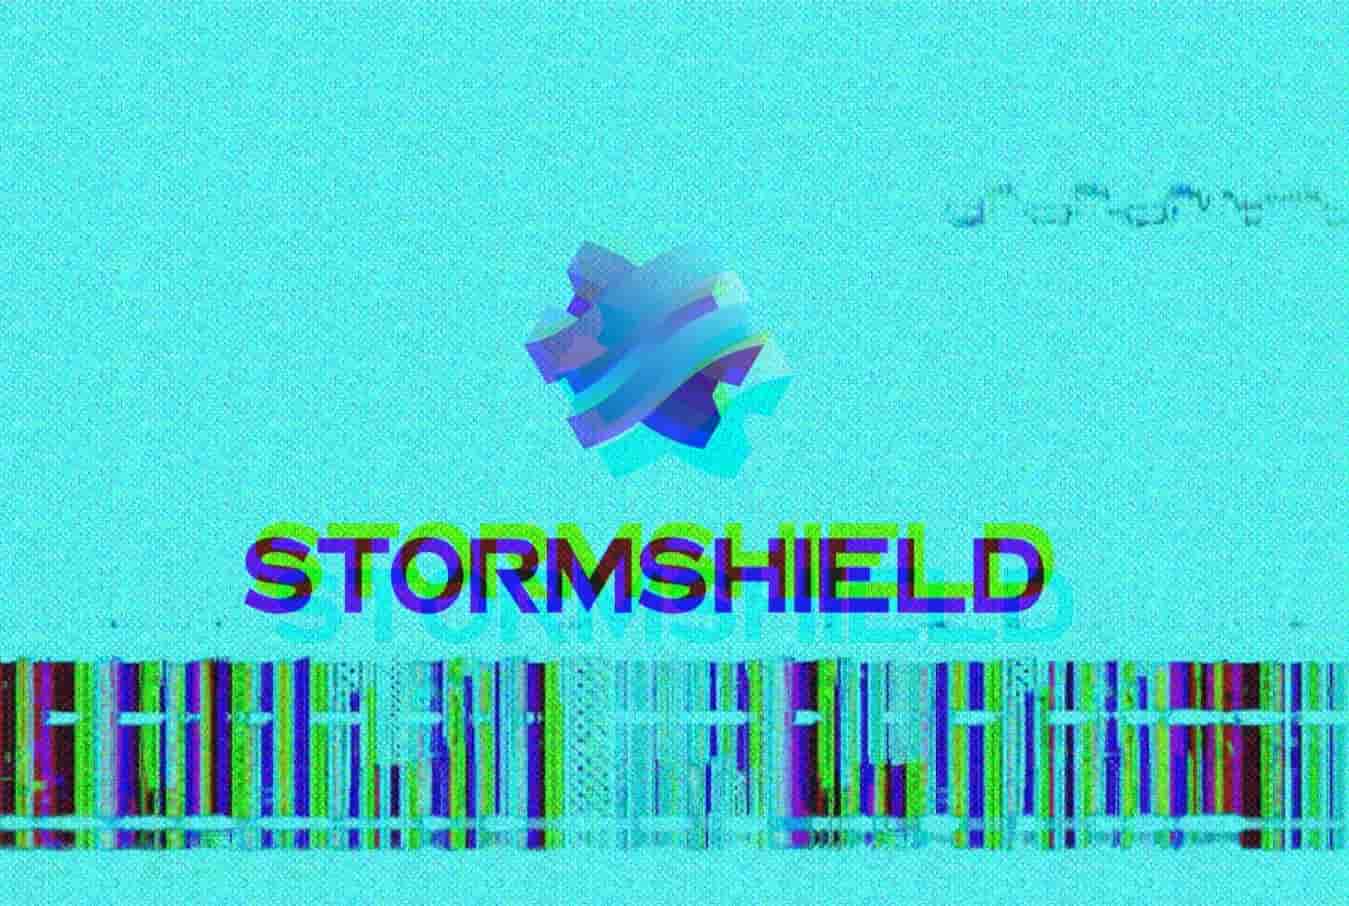 Cybersecurity firm Stormshield breach; customer data, source code stolen